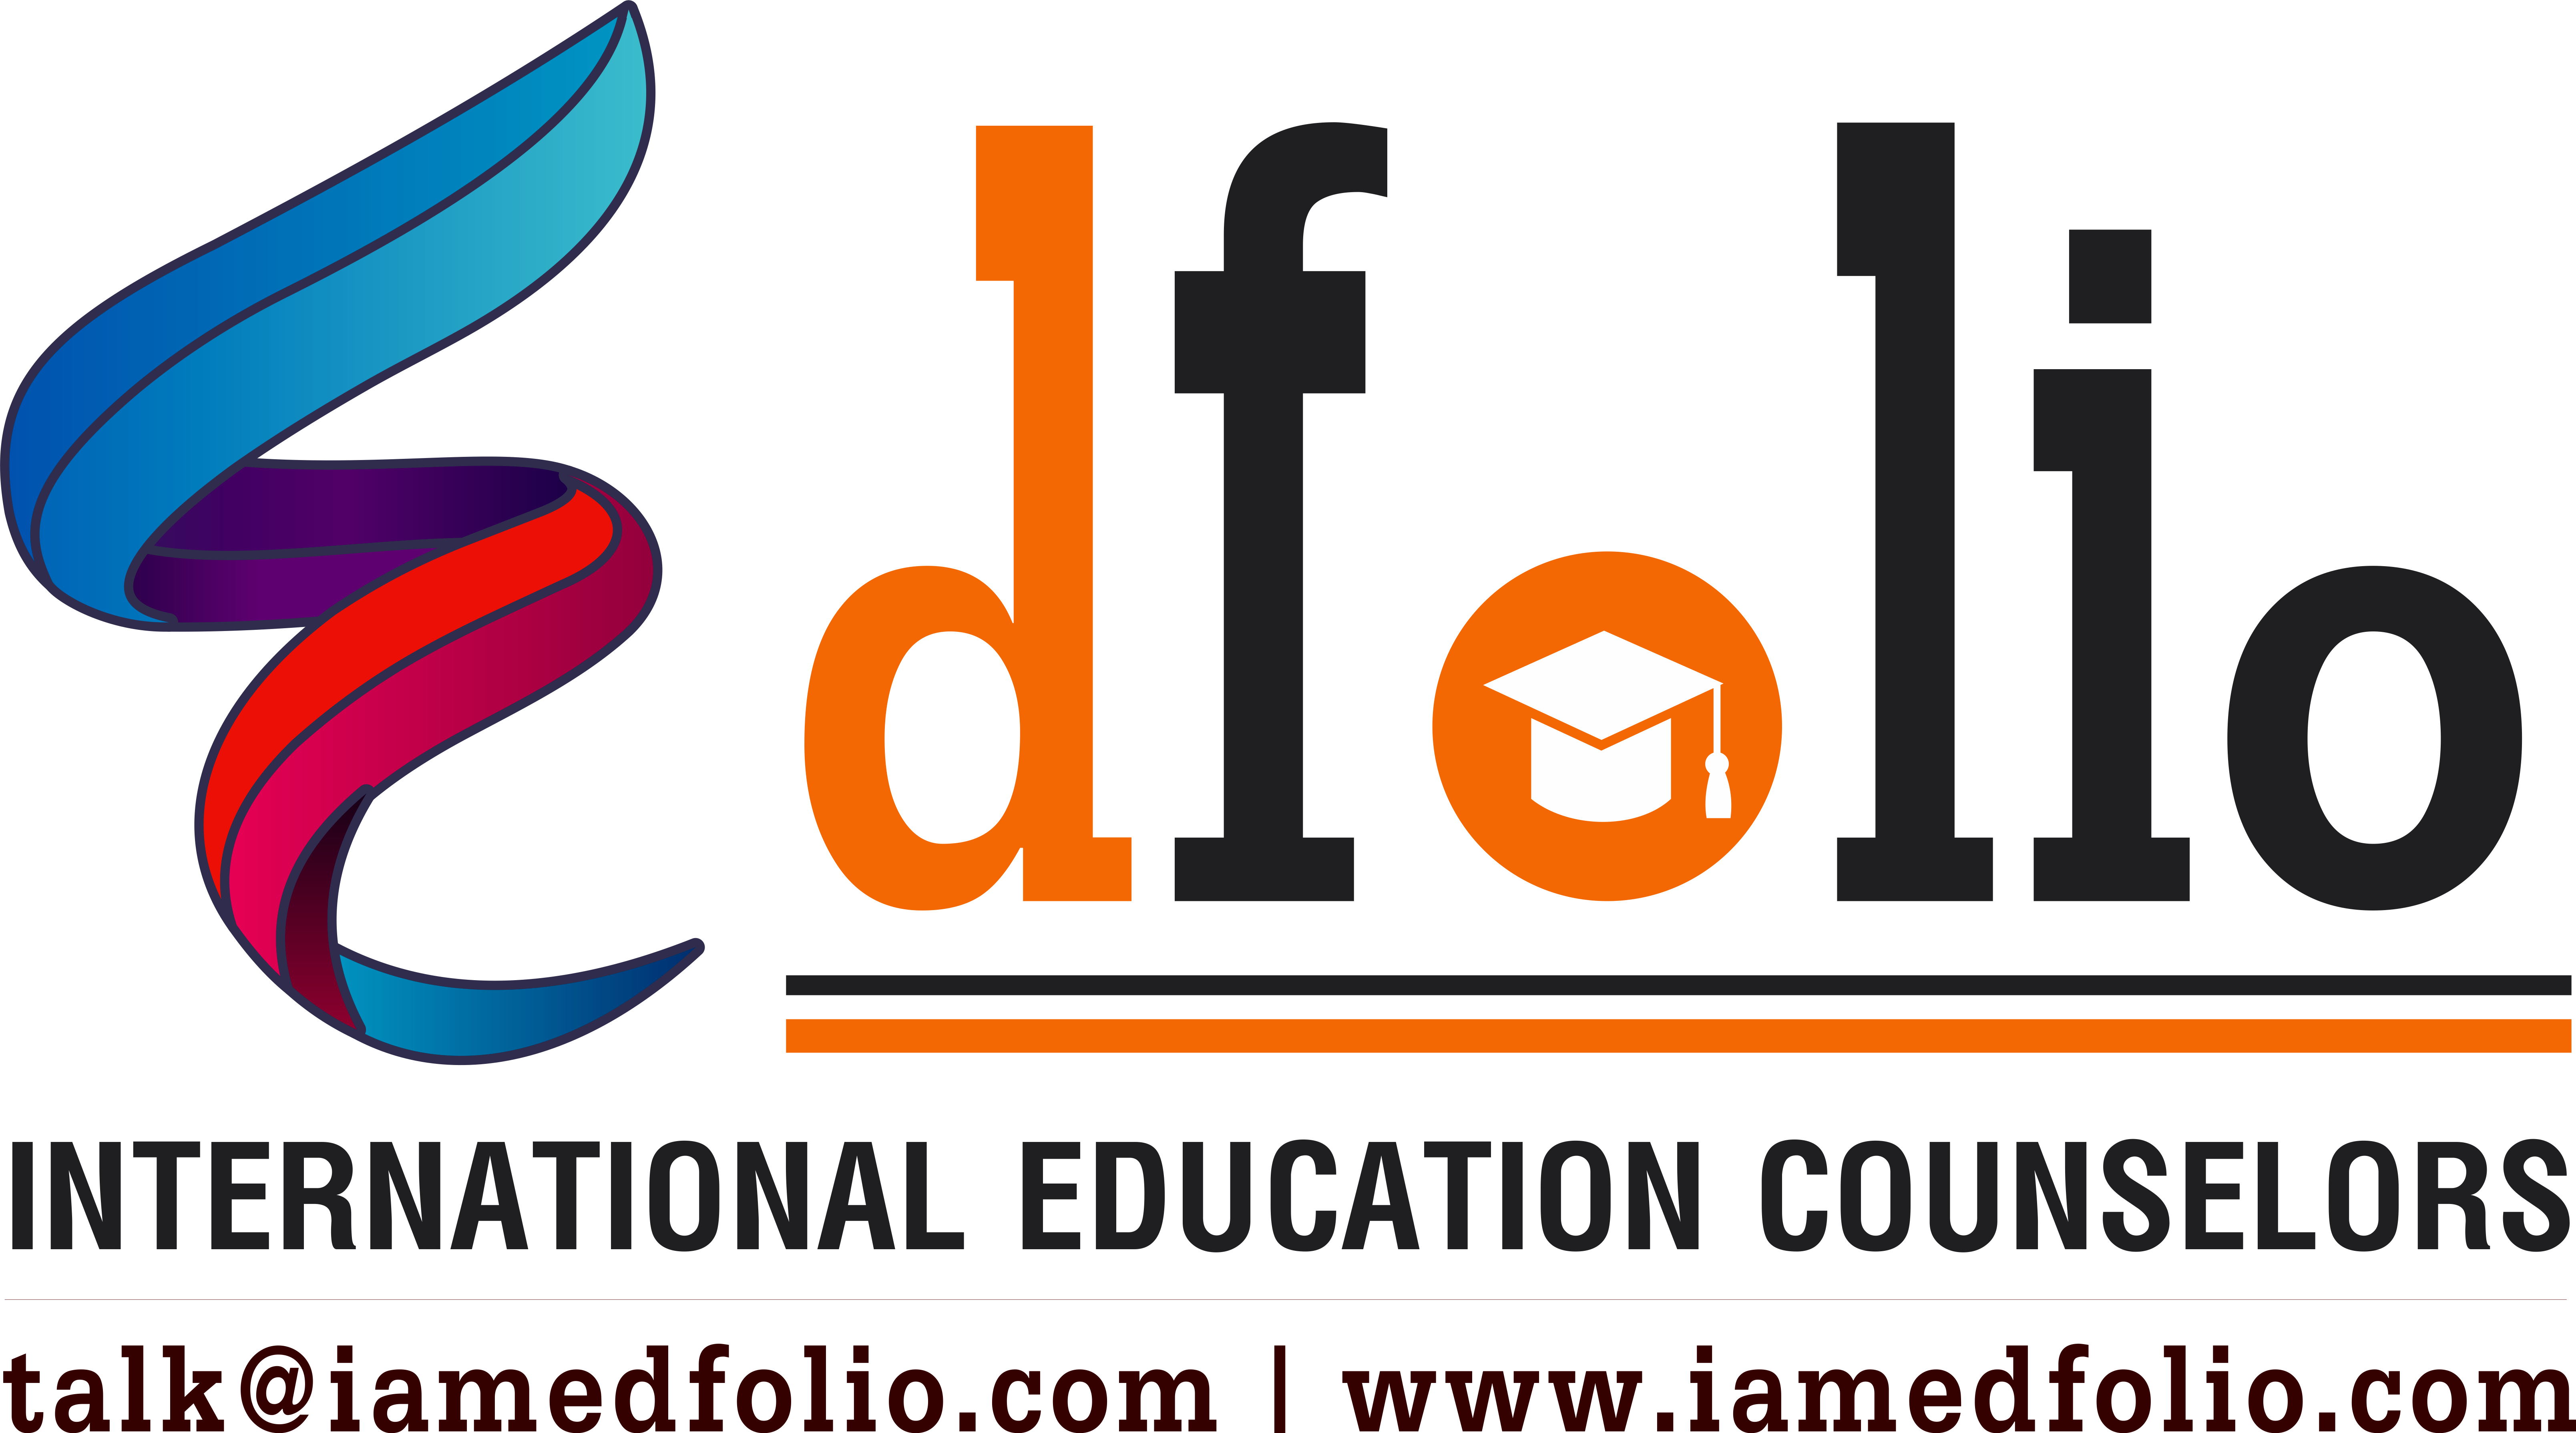 EdFolio International Education Counselors